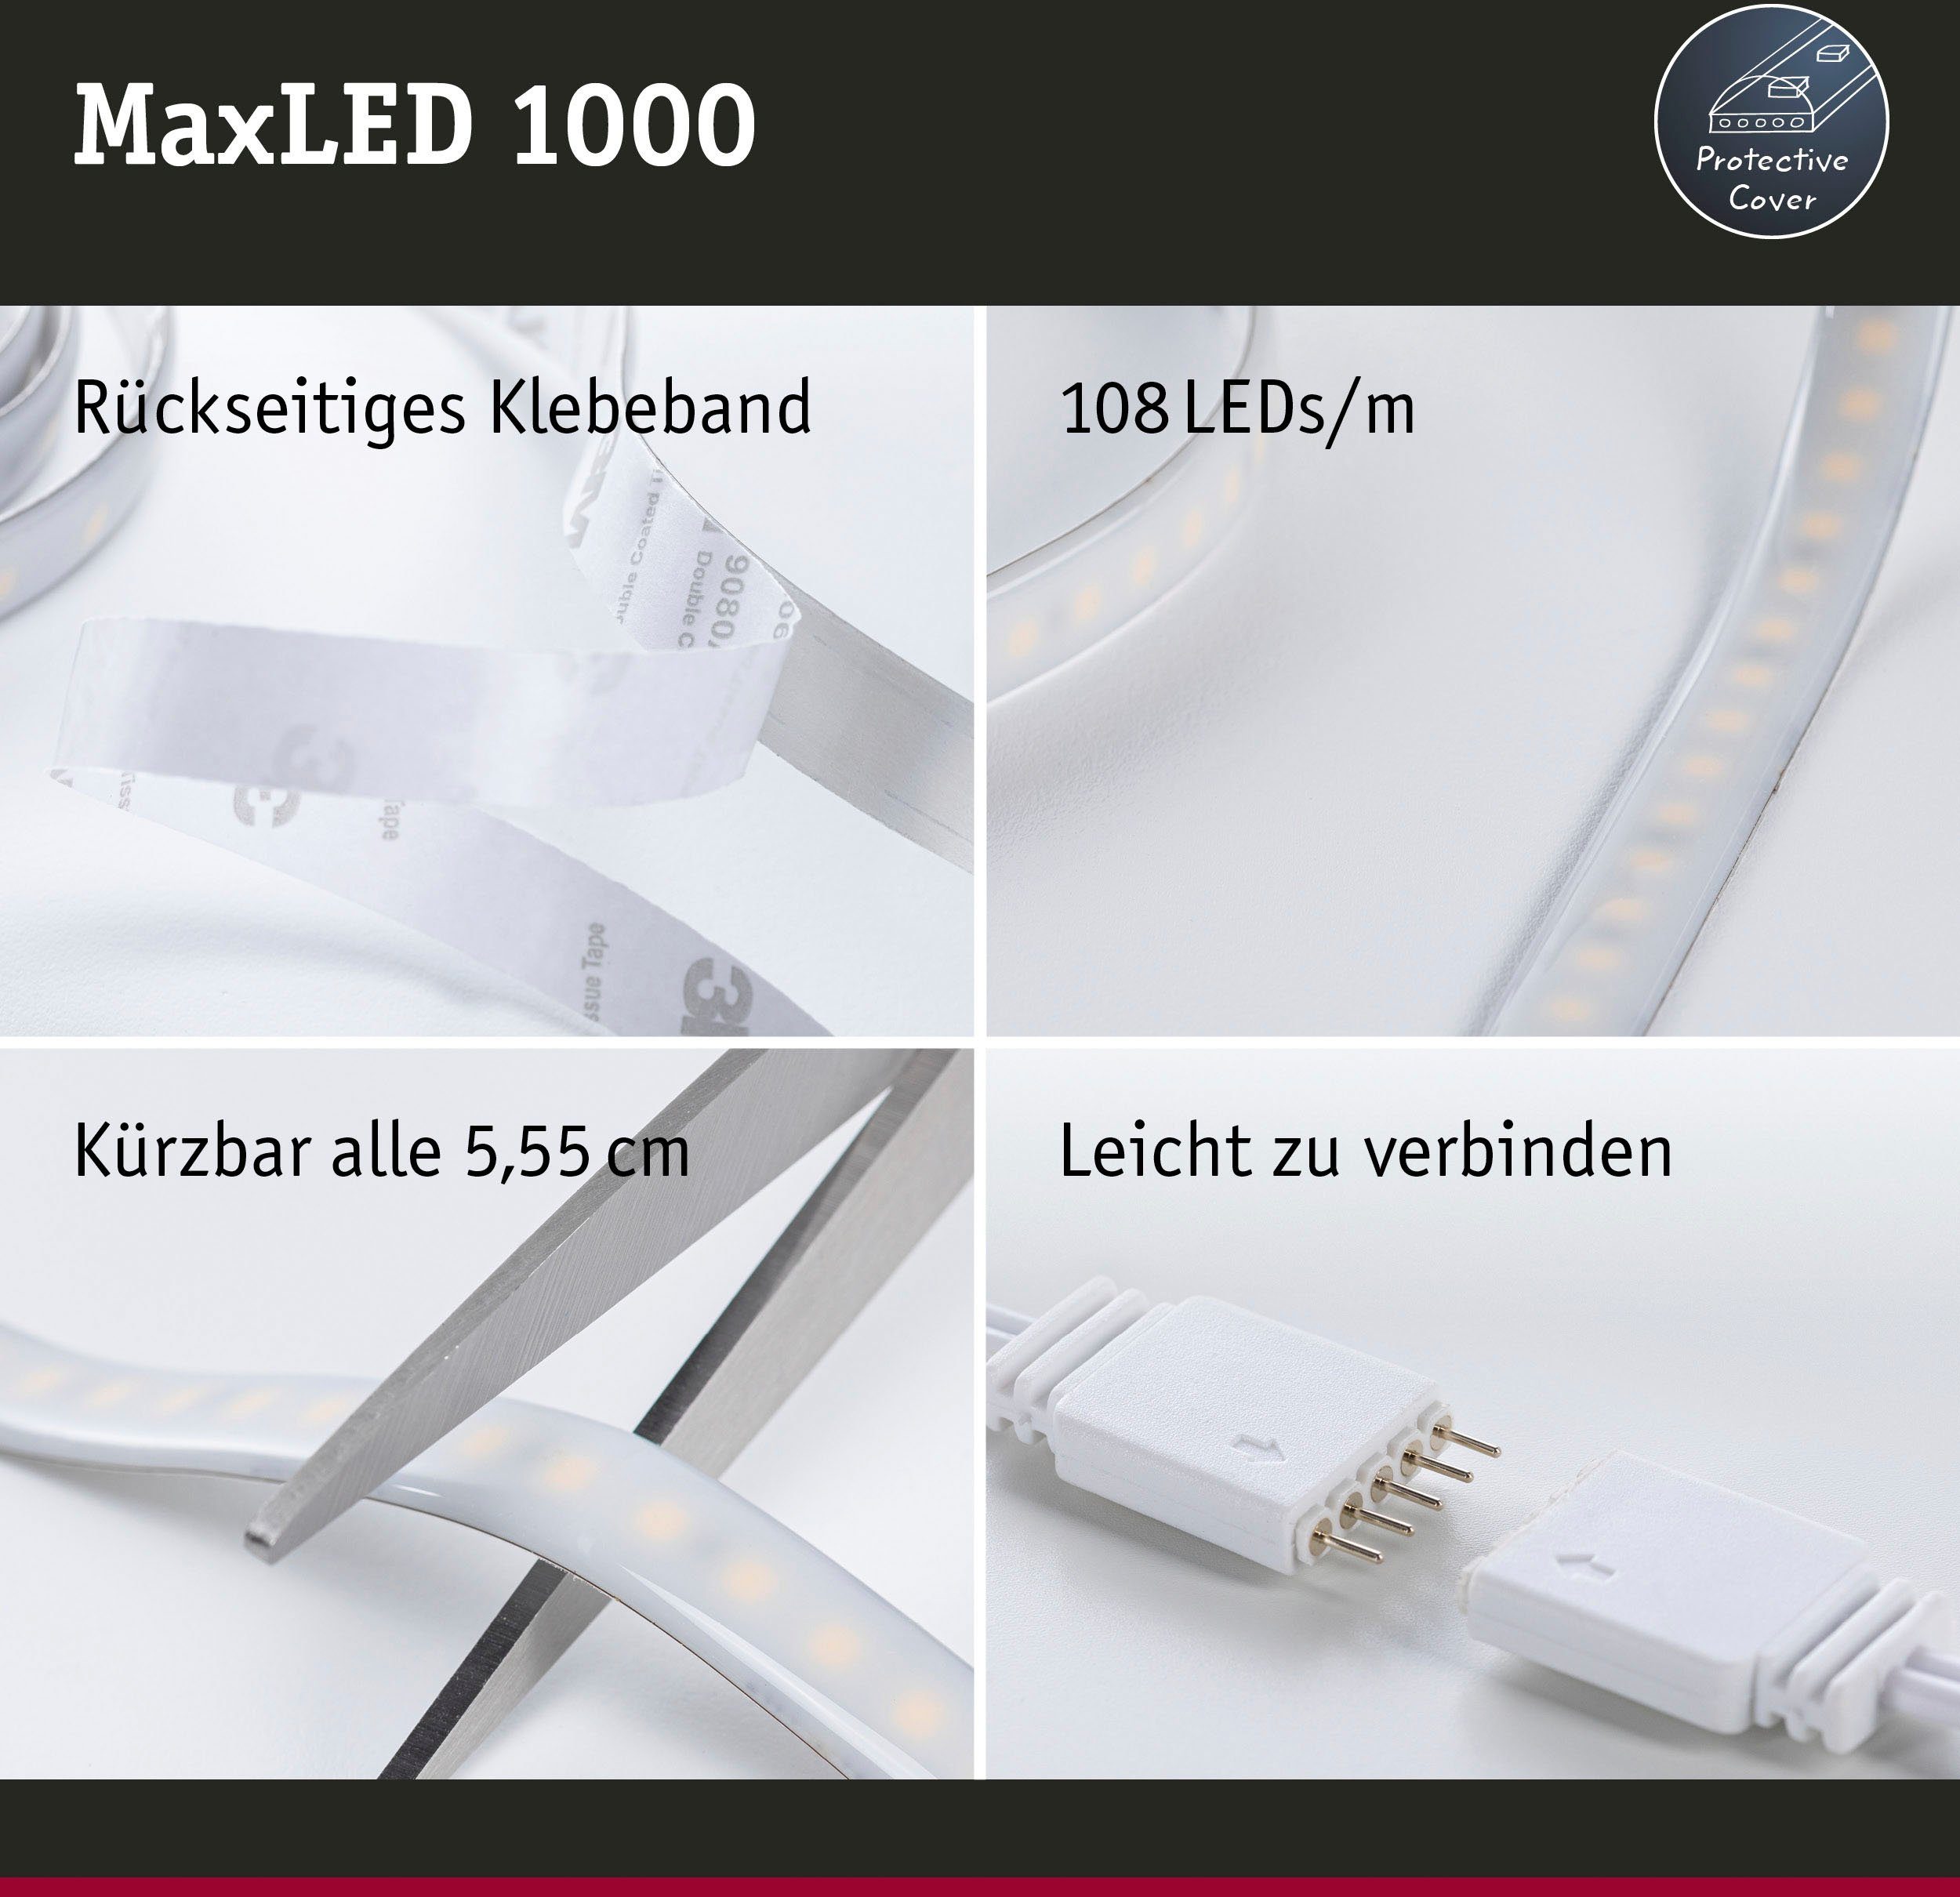 230/24V MaxLED 1000 32W 1-flammig, IP44 Basisset 3m Paulmann Cover 2700-6500K LED-Streifen 60VA, White Tunable